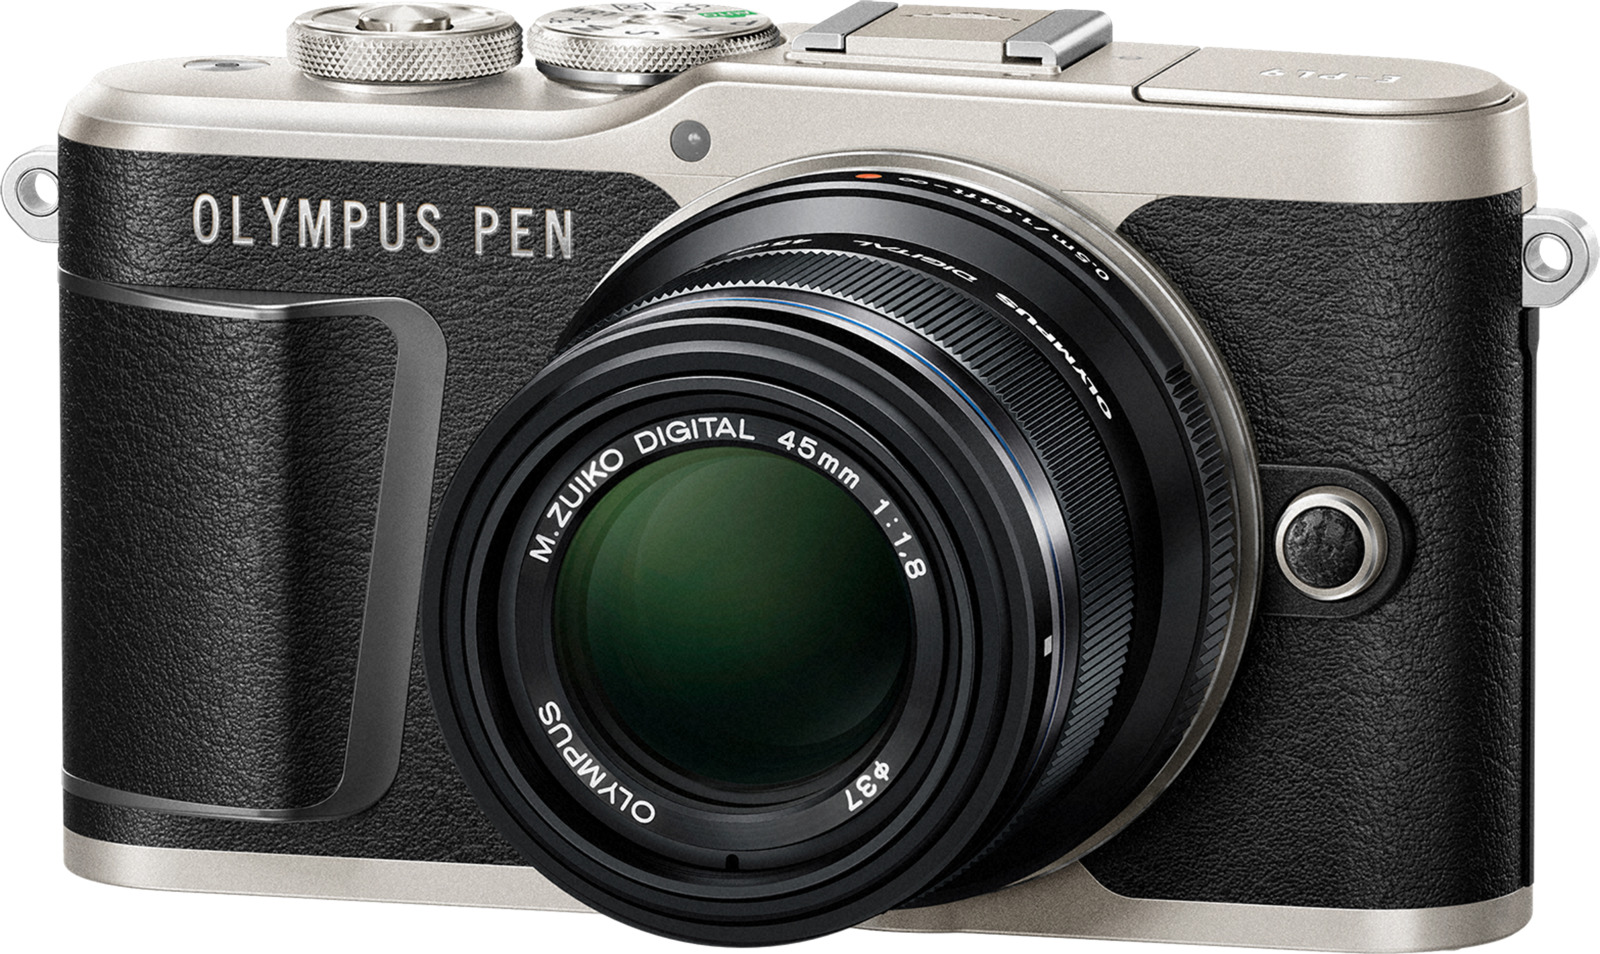 Фотоаппарат Olympus E-PL9 белый в комплекте с объективами 14-42mm EZ серебристым и 45mm F1.8 серебристым (V205092WEK000)